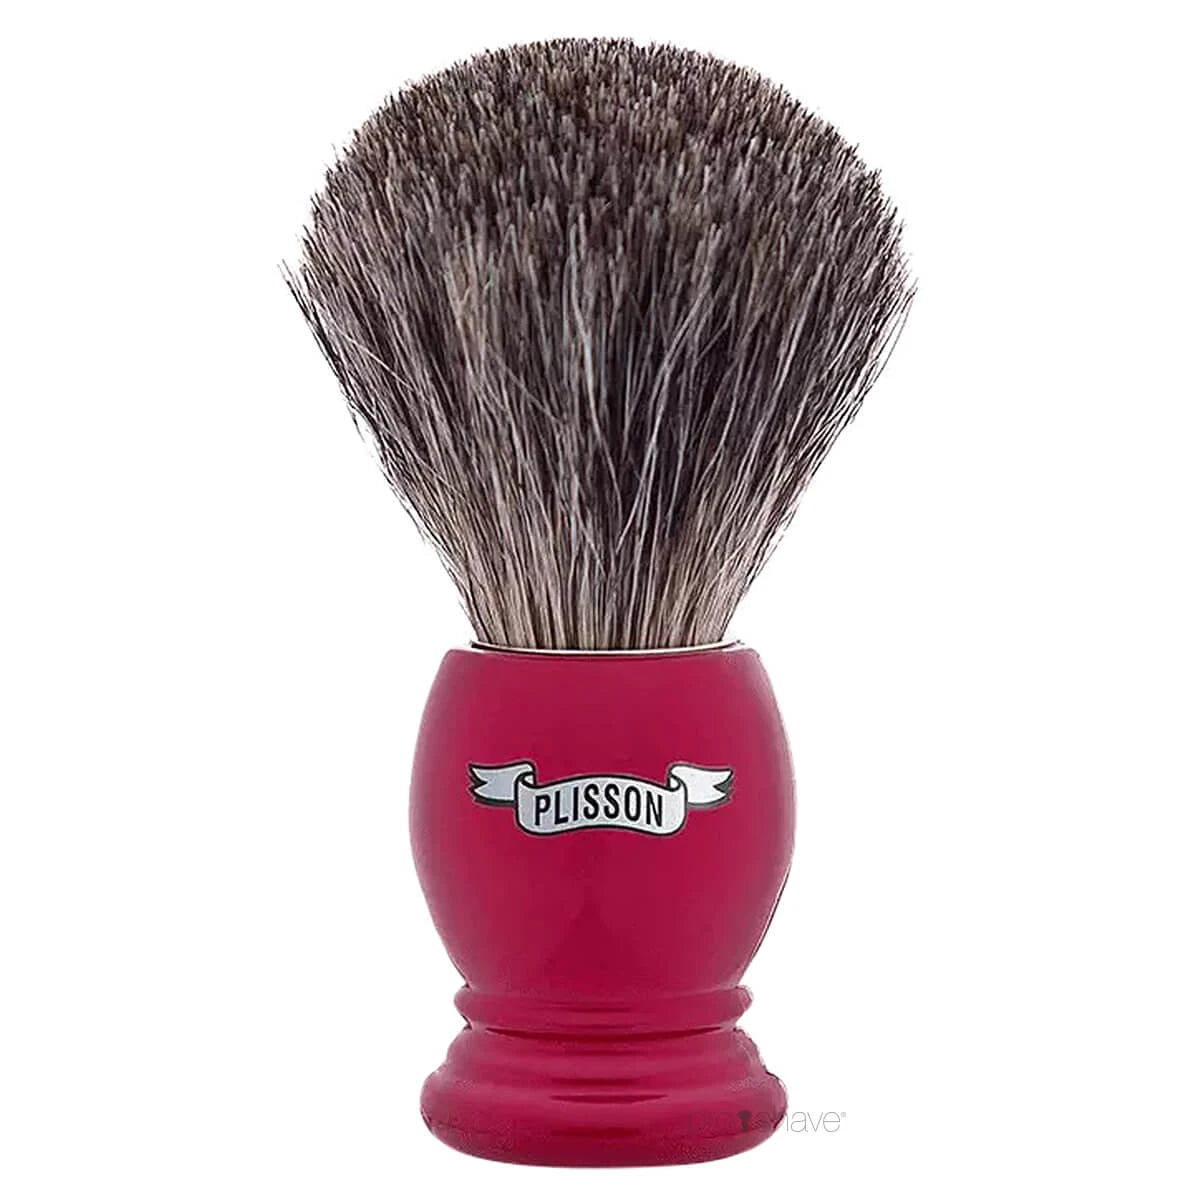 Plisson Shaving Brush, Russian Grey Badger & Pearl Red- Size 12